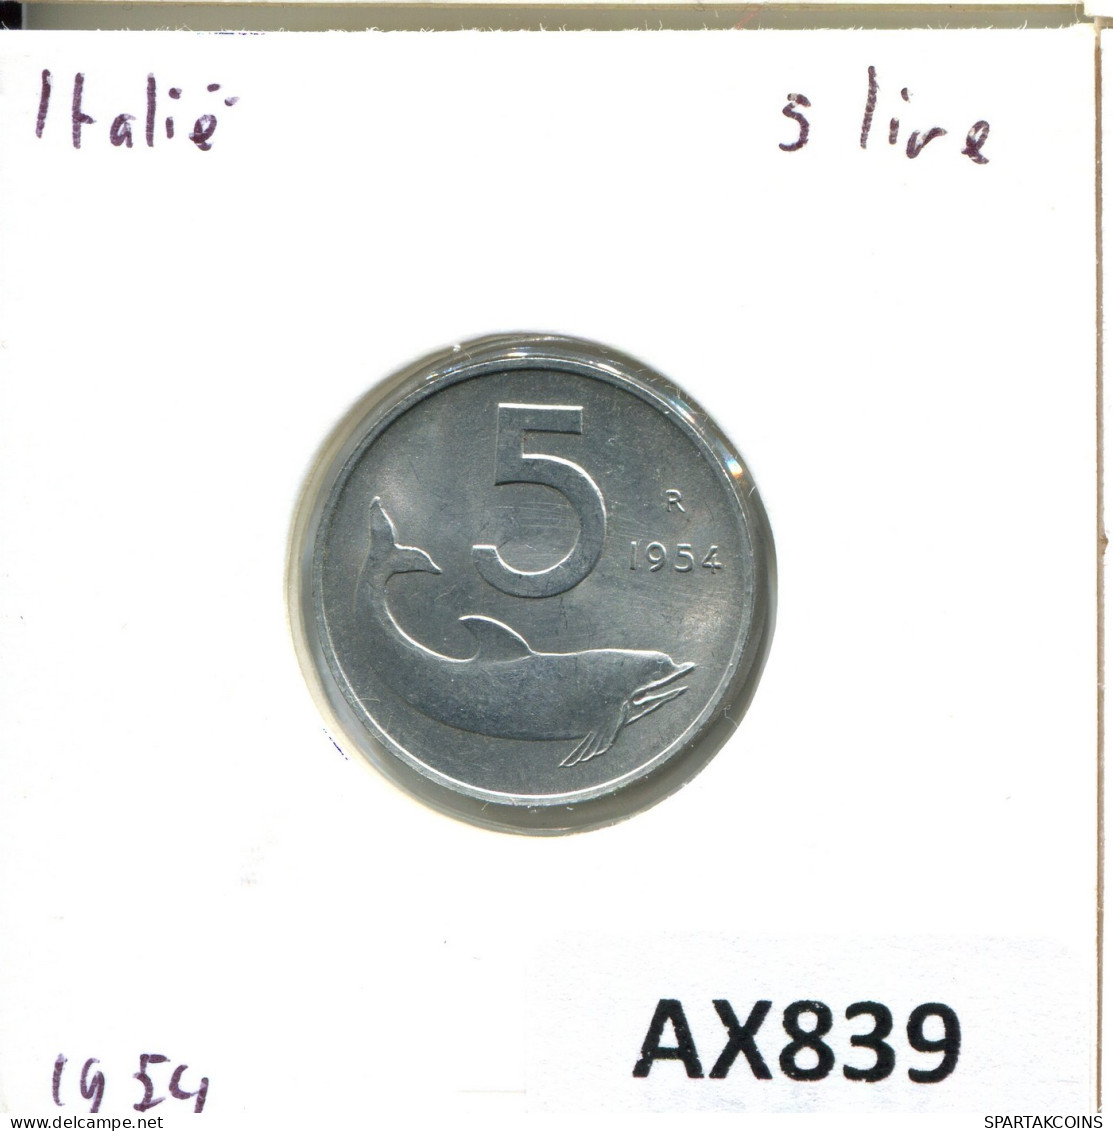 5 LIRE 1954 ITALY Coin #AX839.U.A - 5 Lire